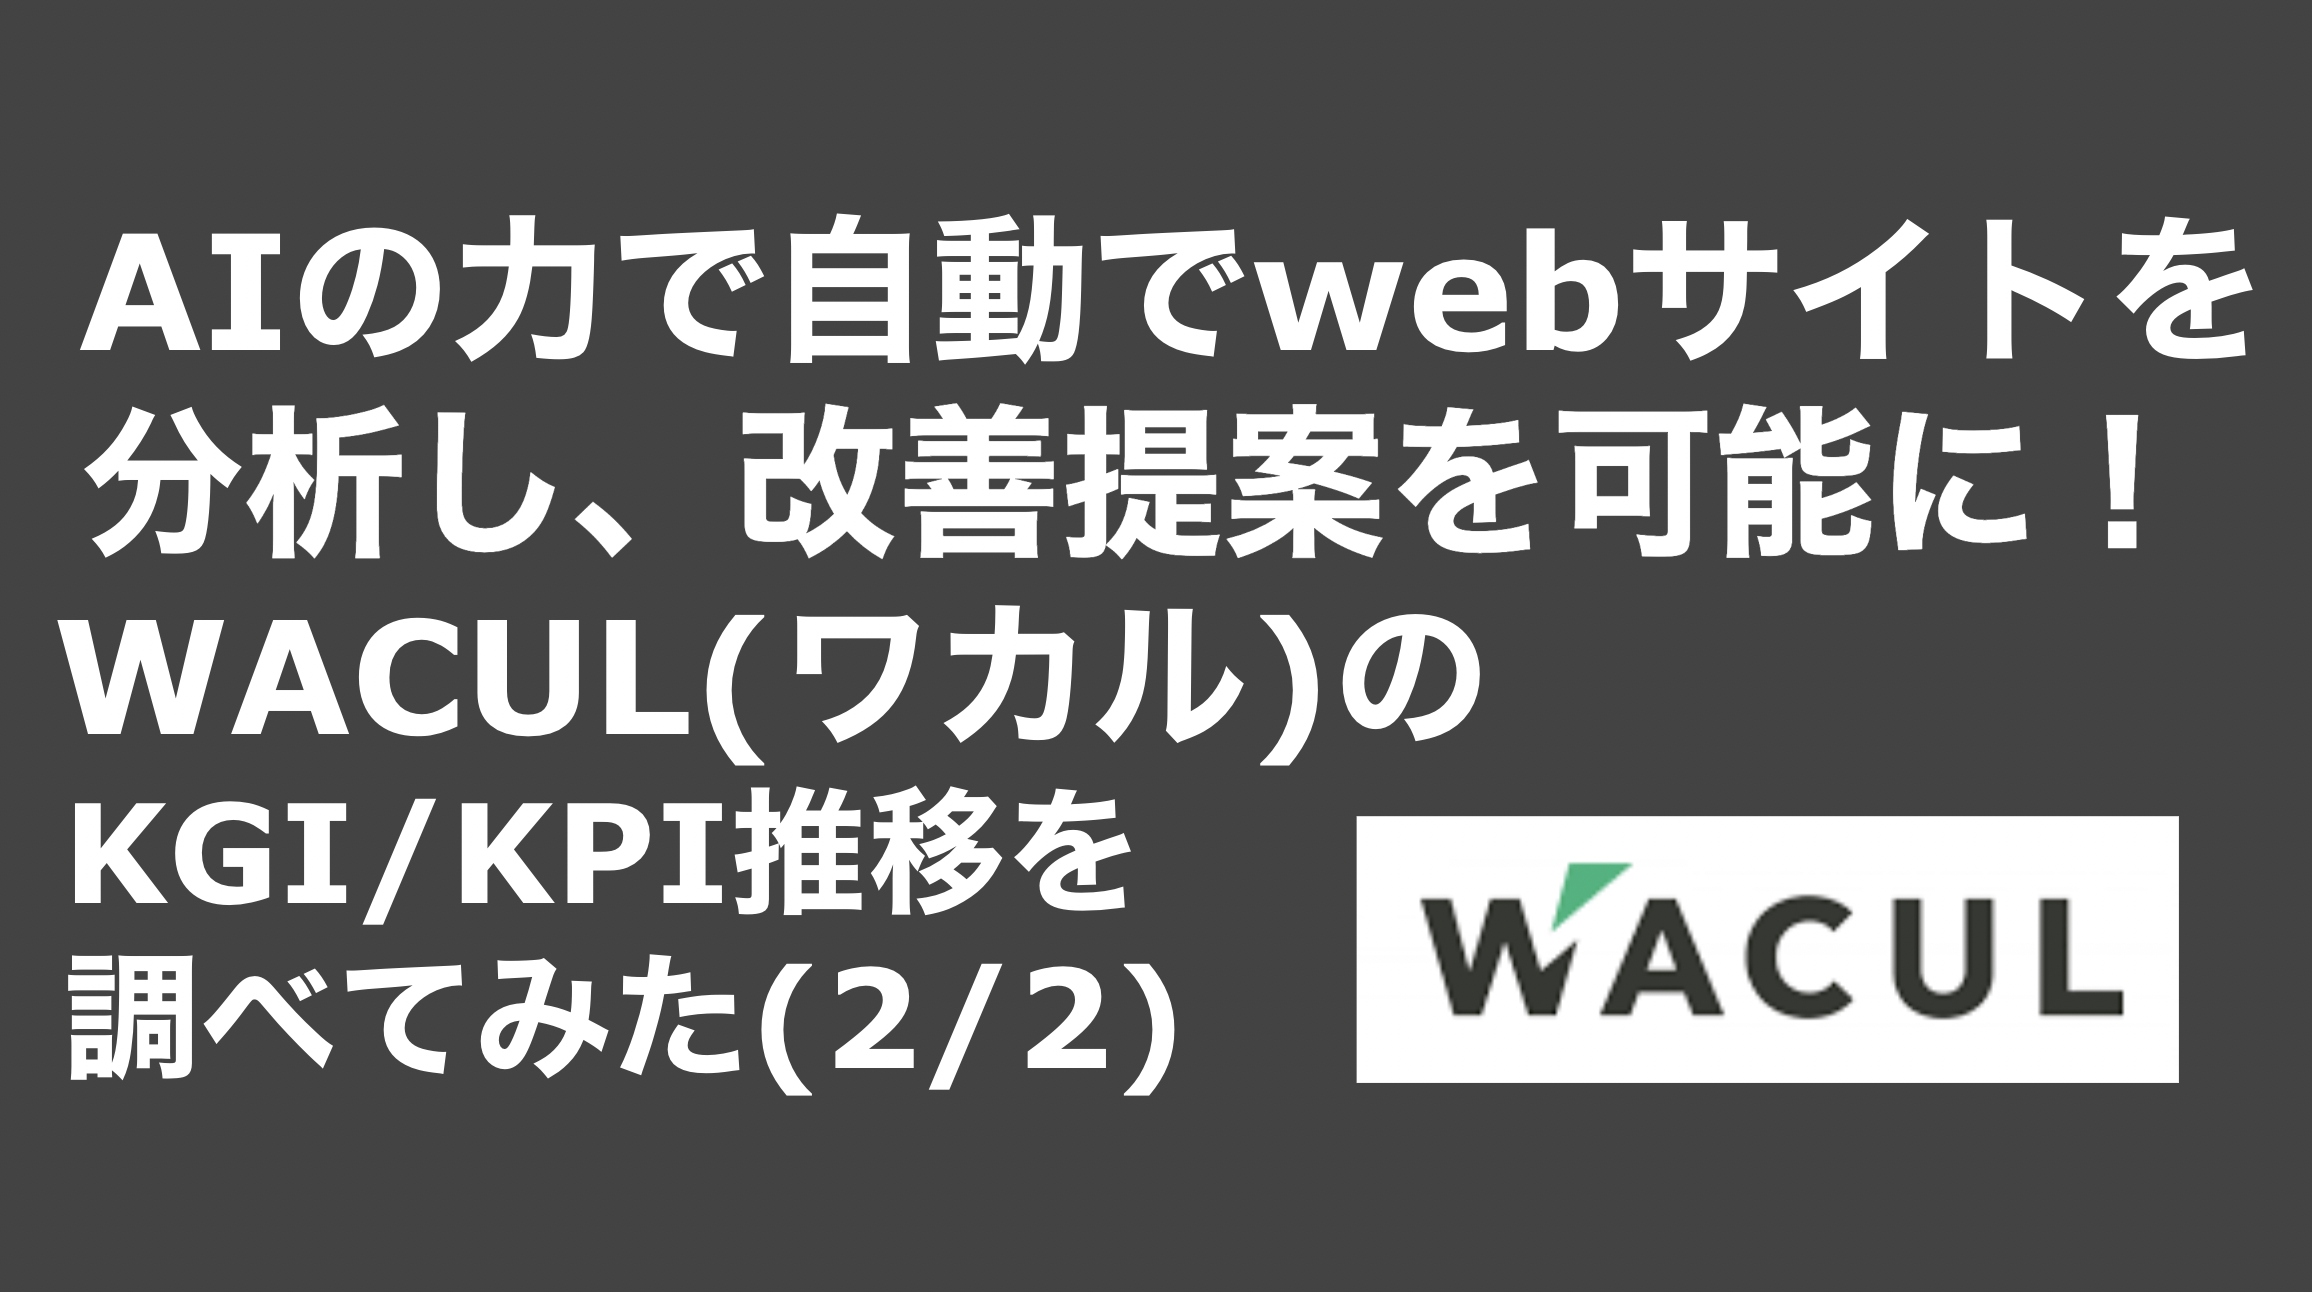 saaslife_ AIの力で自動でwebサイトを分析し、改善提案を可能に！WACUL(ワカル)のKGI/KPI推移を調べてみた(2/2)